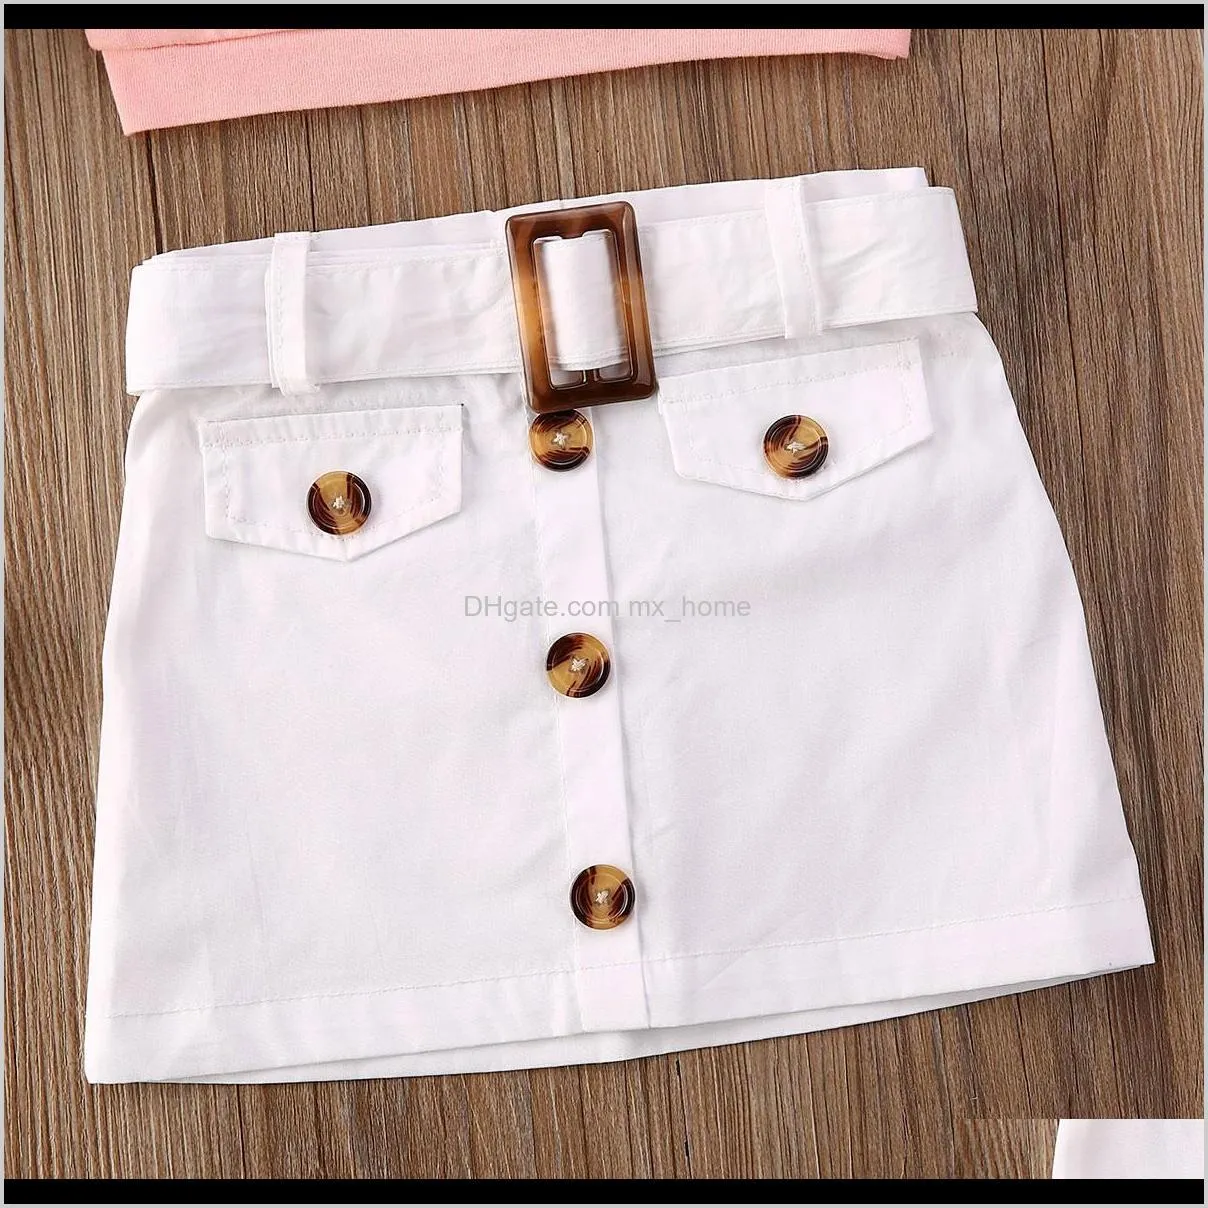 1-5years kid girls summer clothing infant crops sleeveless tank top shirt mini white skirt fashion set